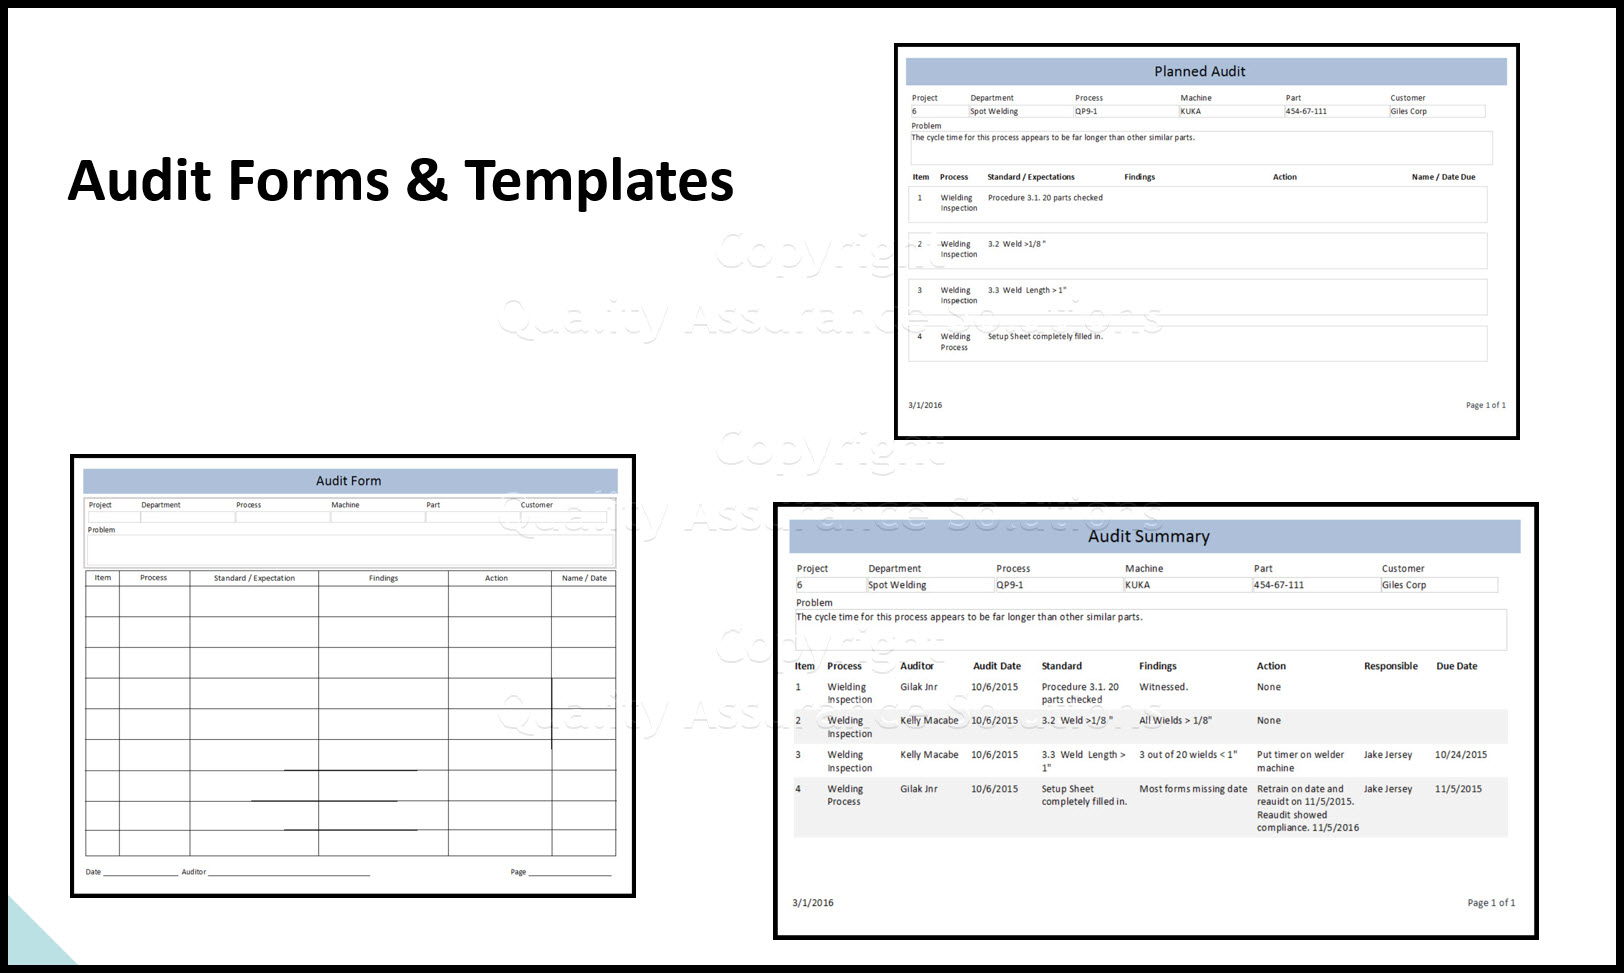 Audit Forms & Templates